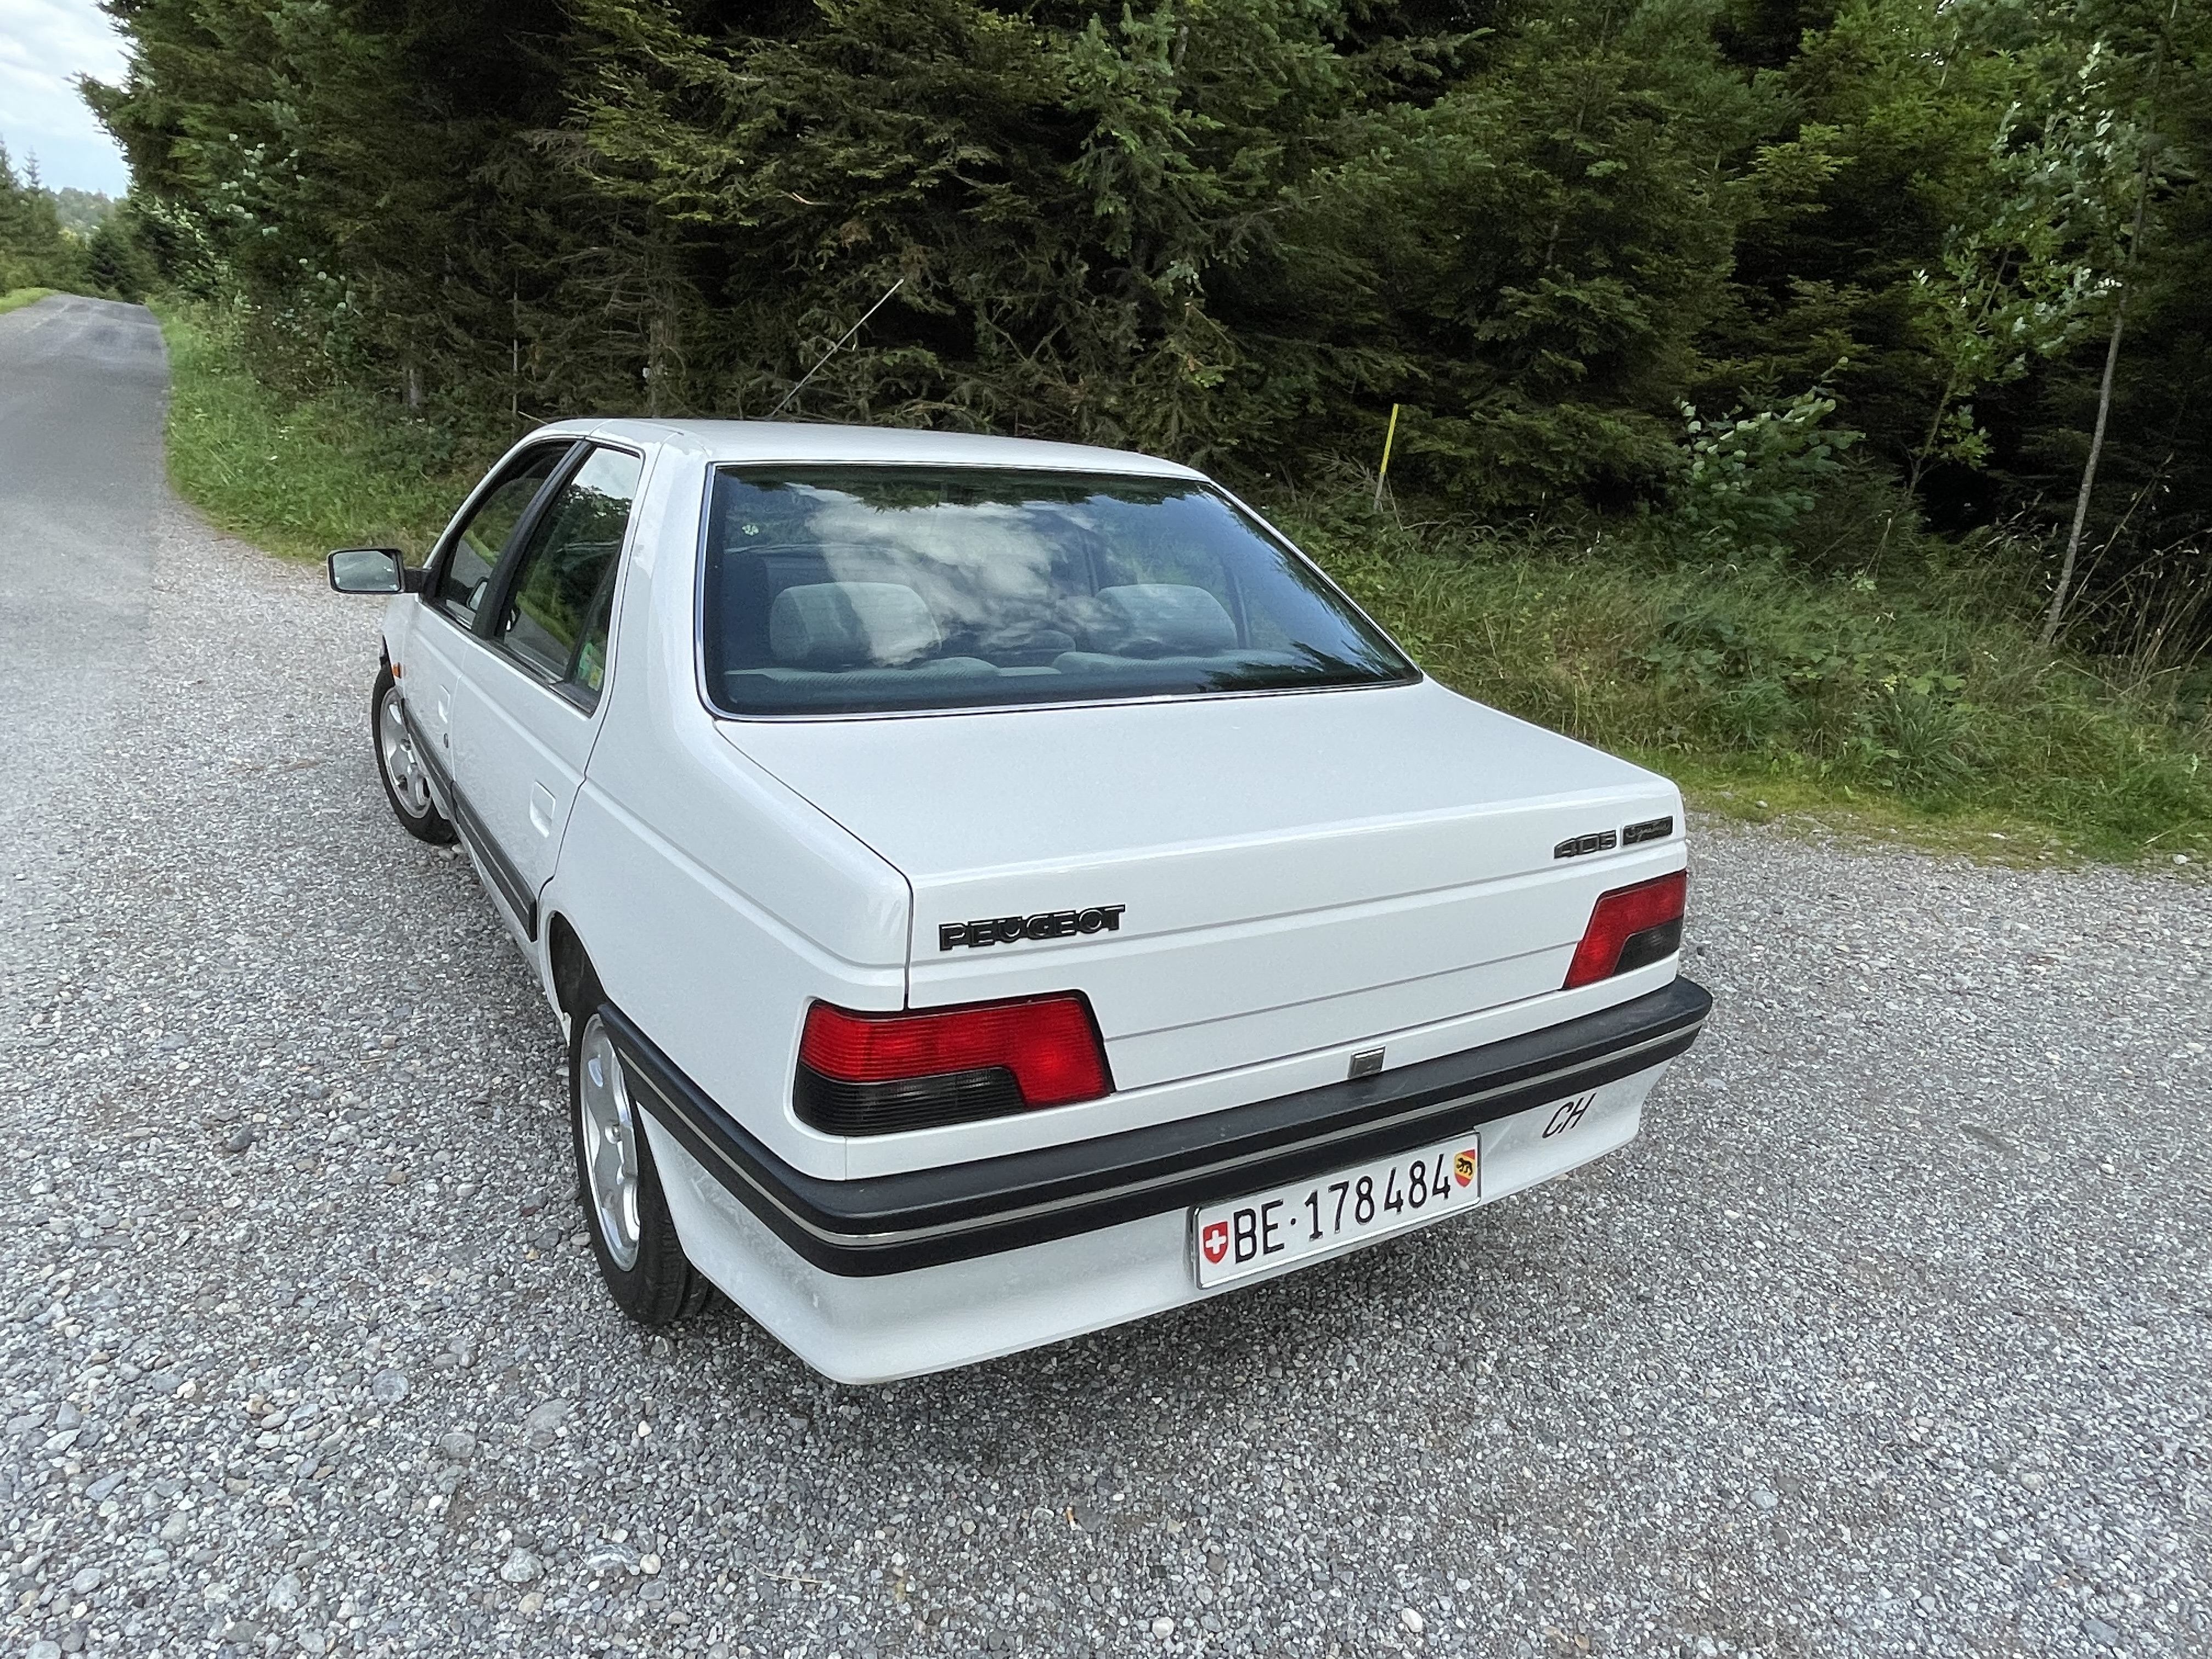 [Signature 2.0i - Bern] Peugeot 405 2.0 i Signature, année 1995, 96512 km  Img_46981ff0g